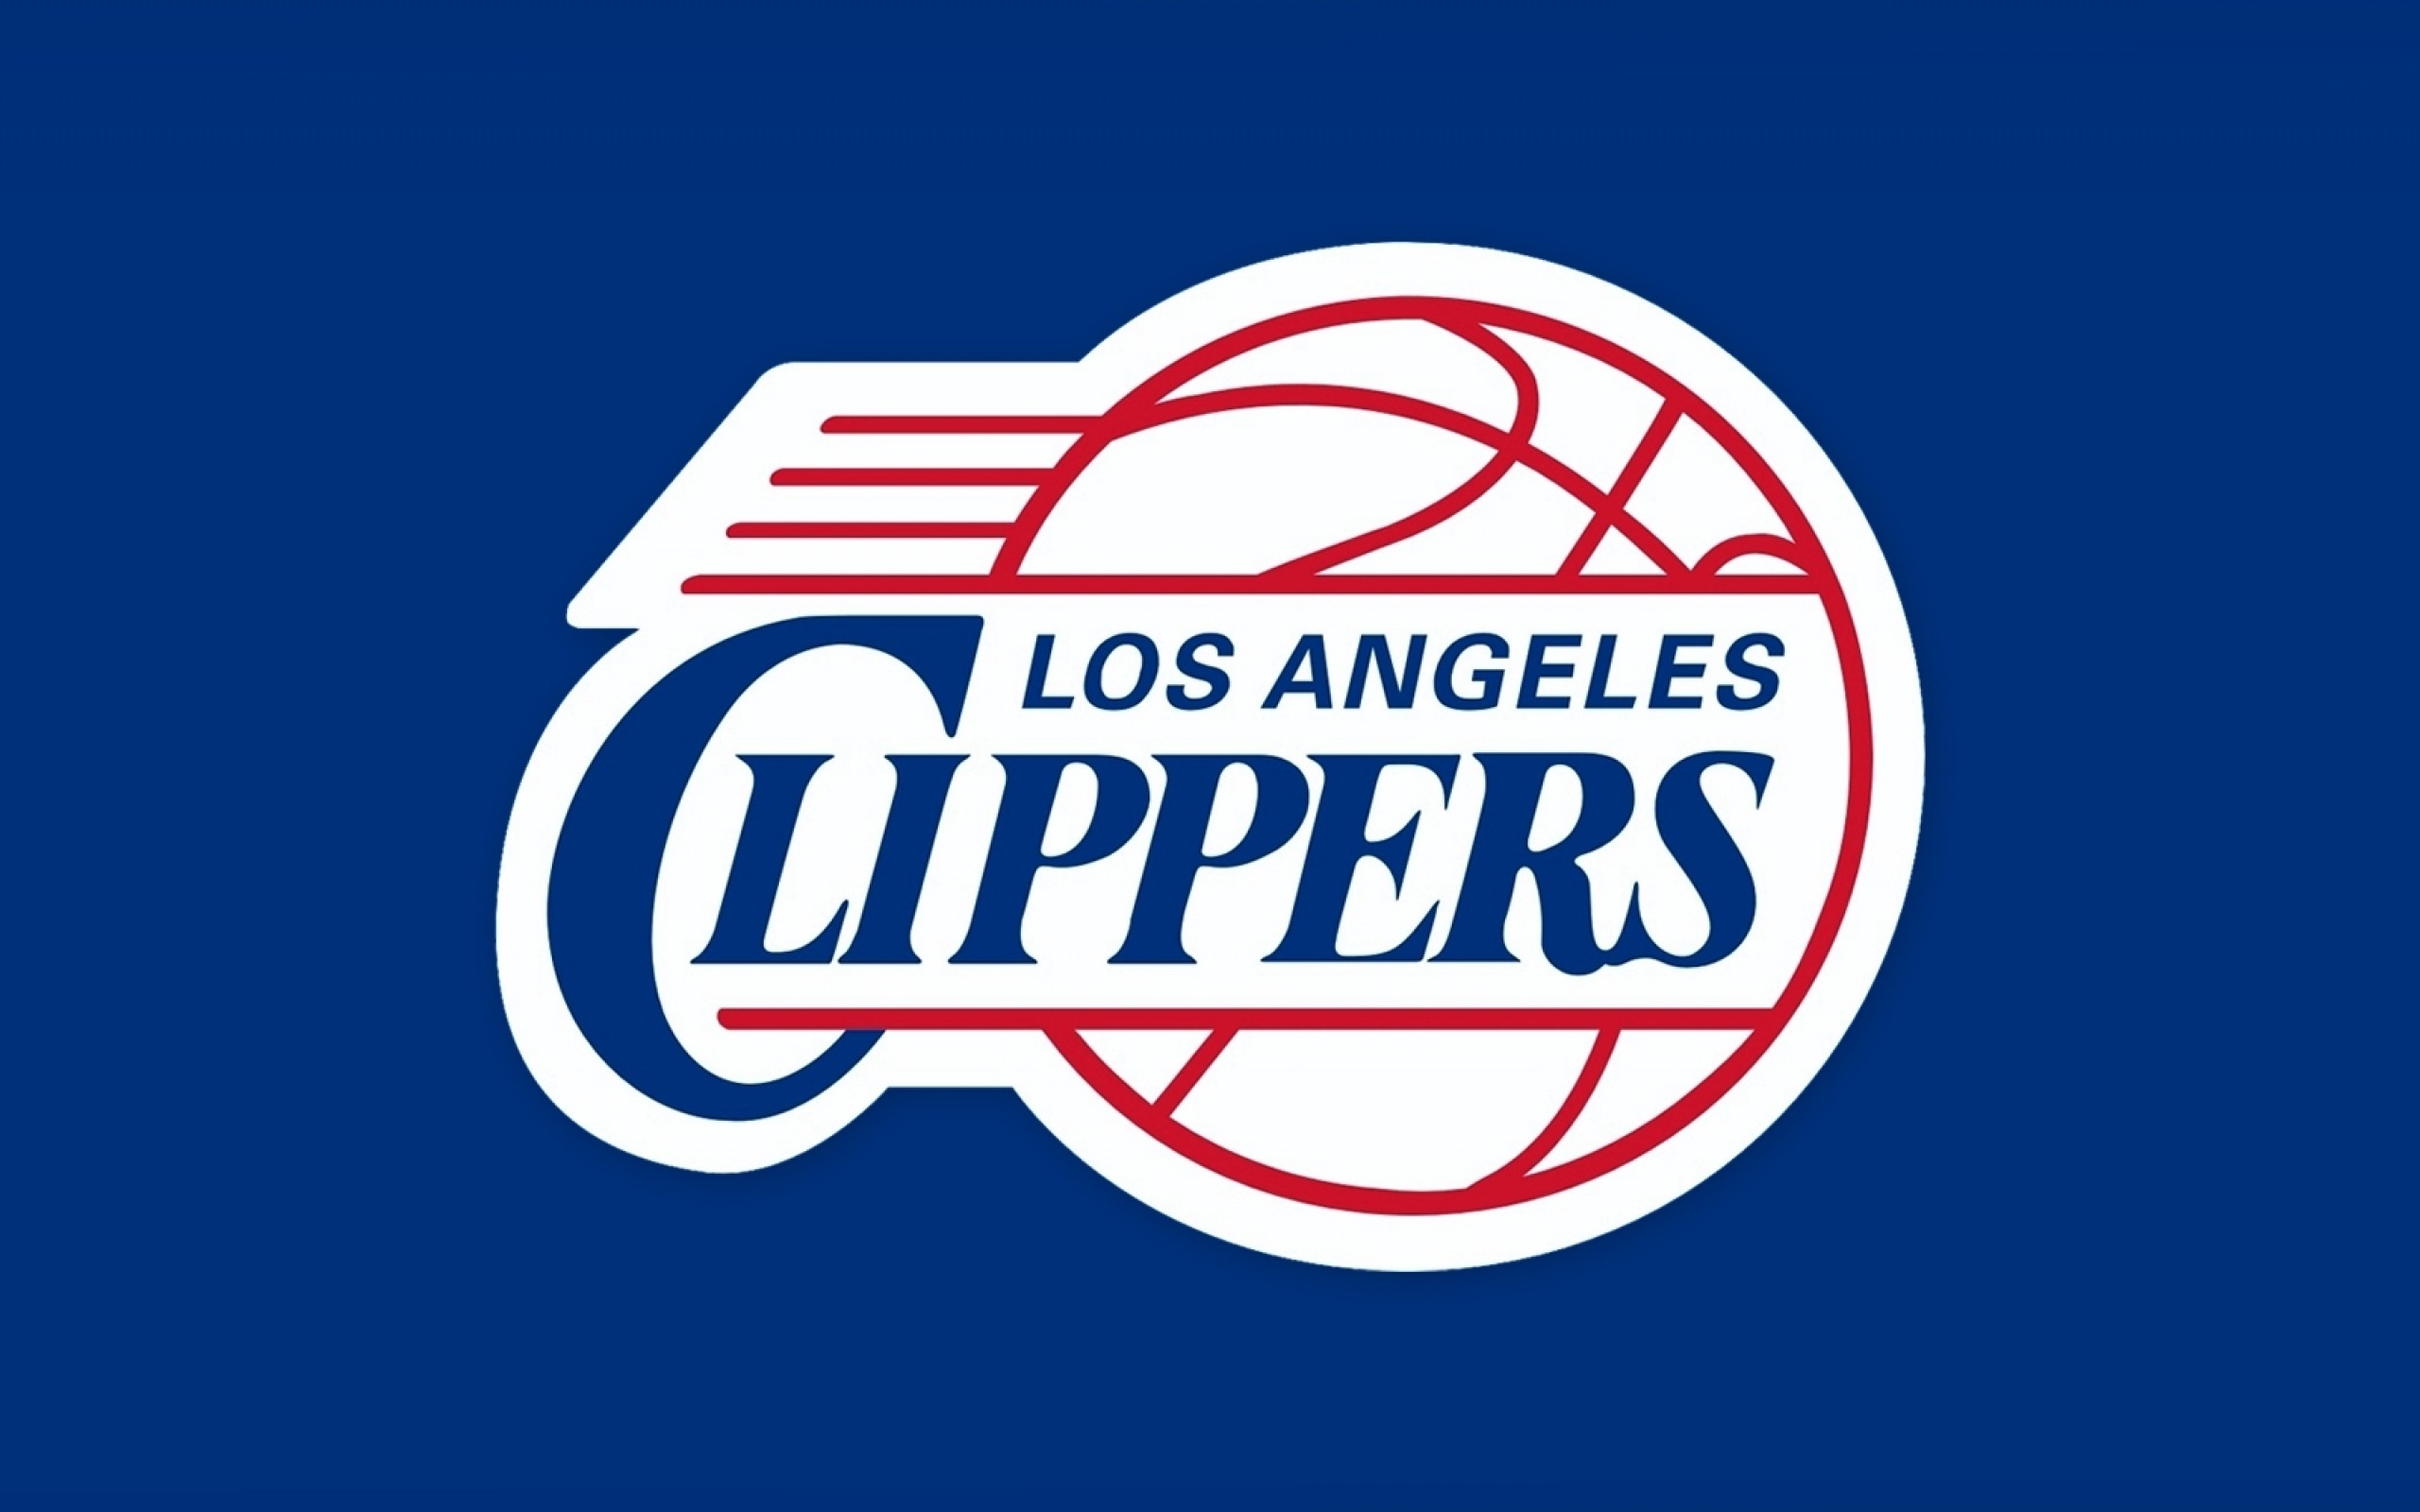 NBA Logos Wallpaper 2560x1600 NBA Logos Los Angeles Clippers